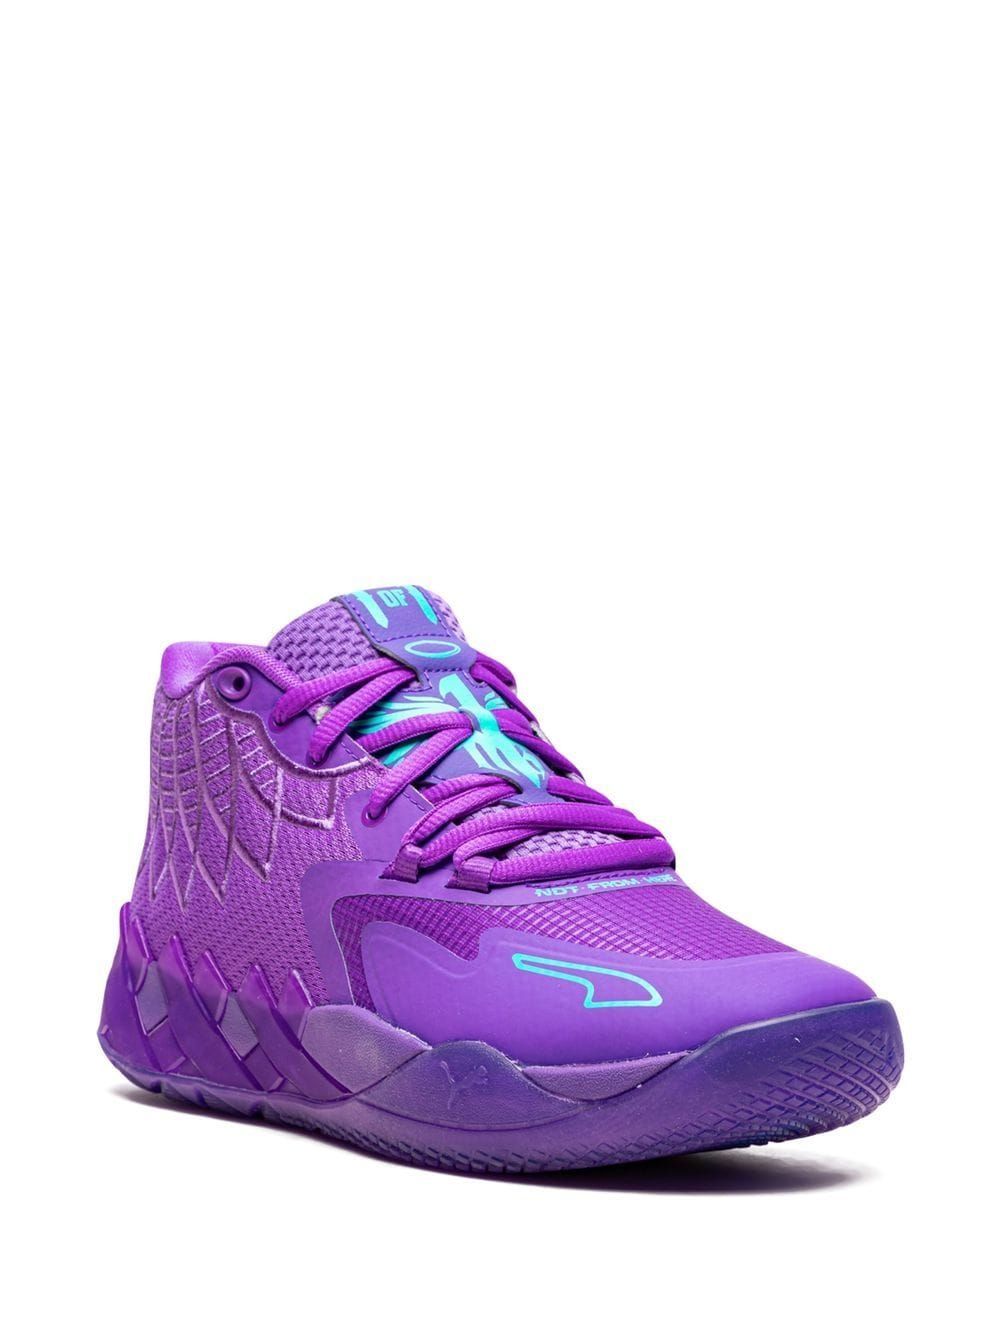 Puma x LaMelo Ball MB.01 Queen City sneakers in Purple | Stylemi